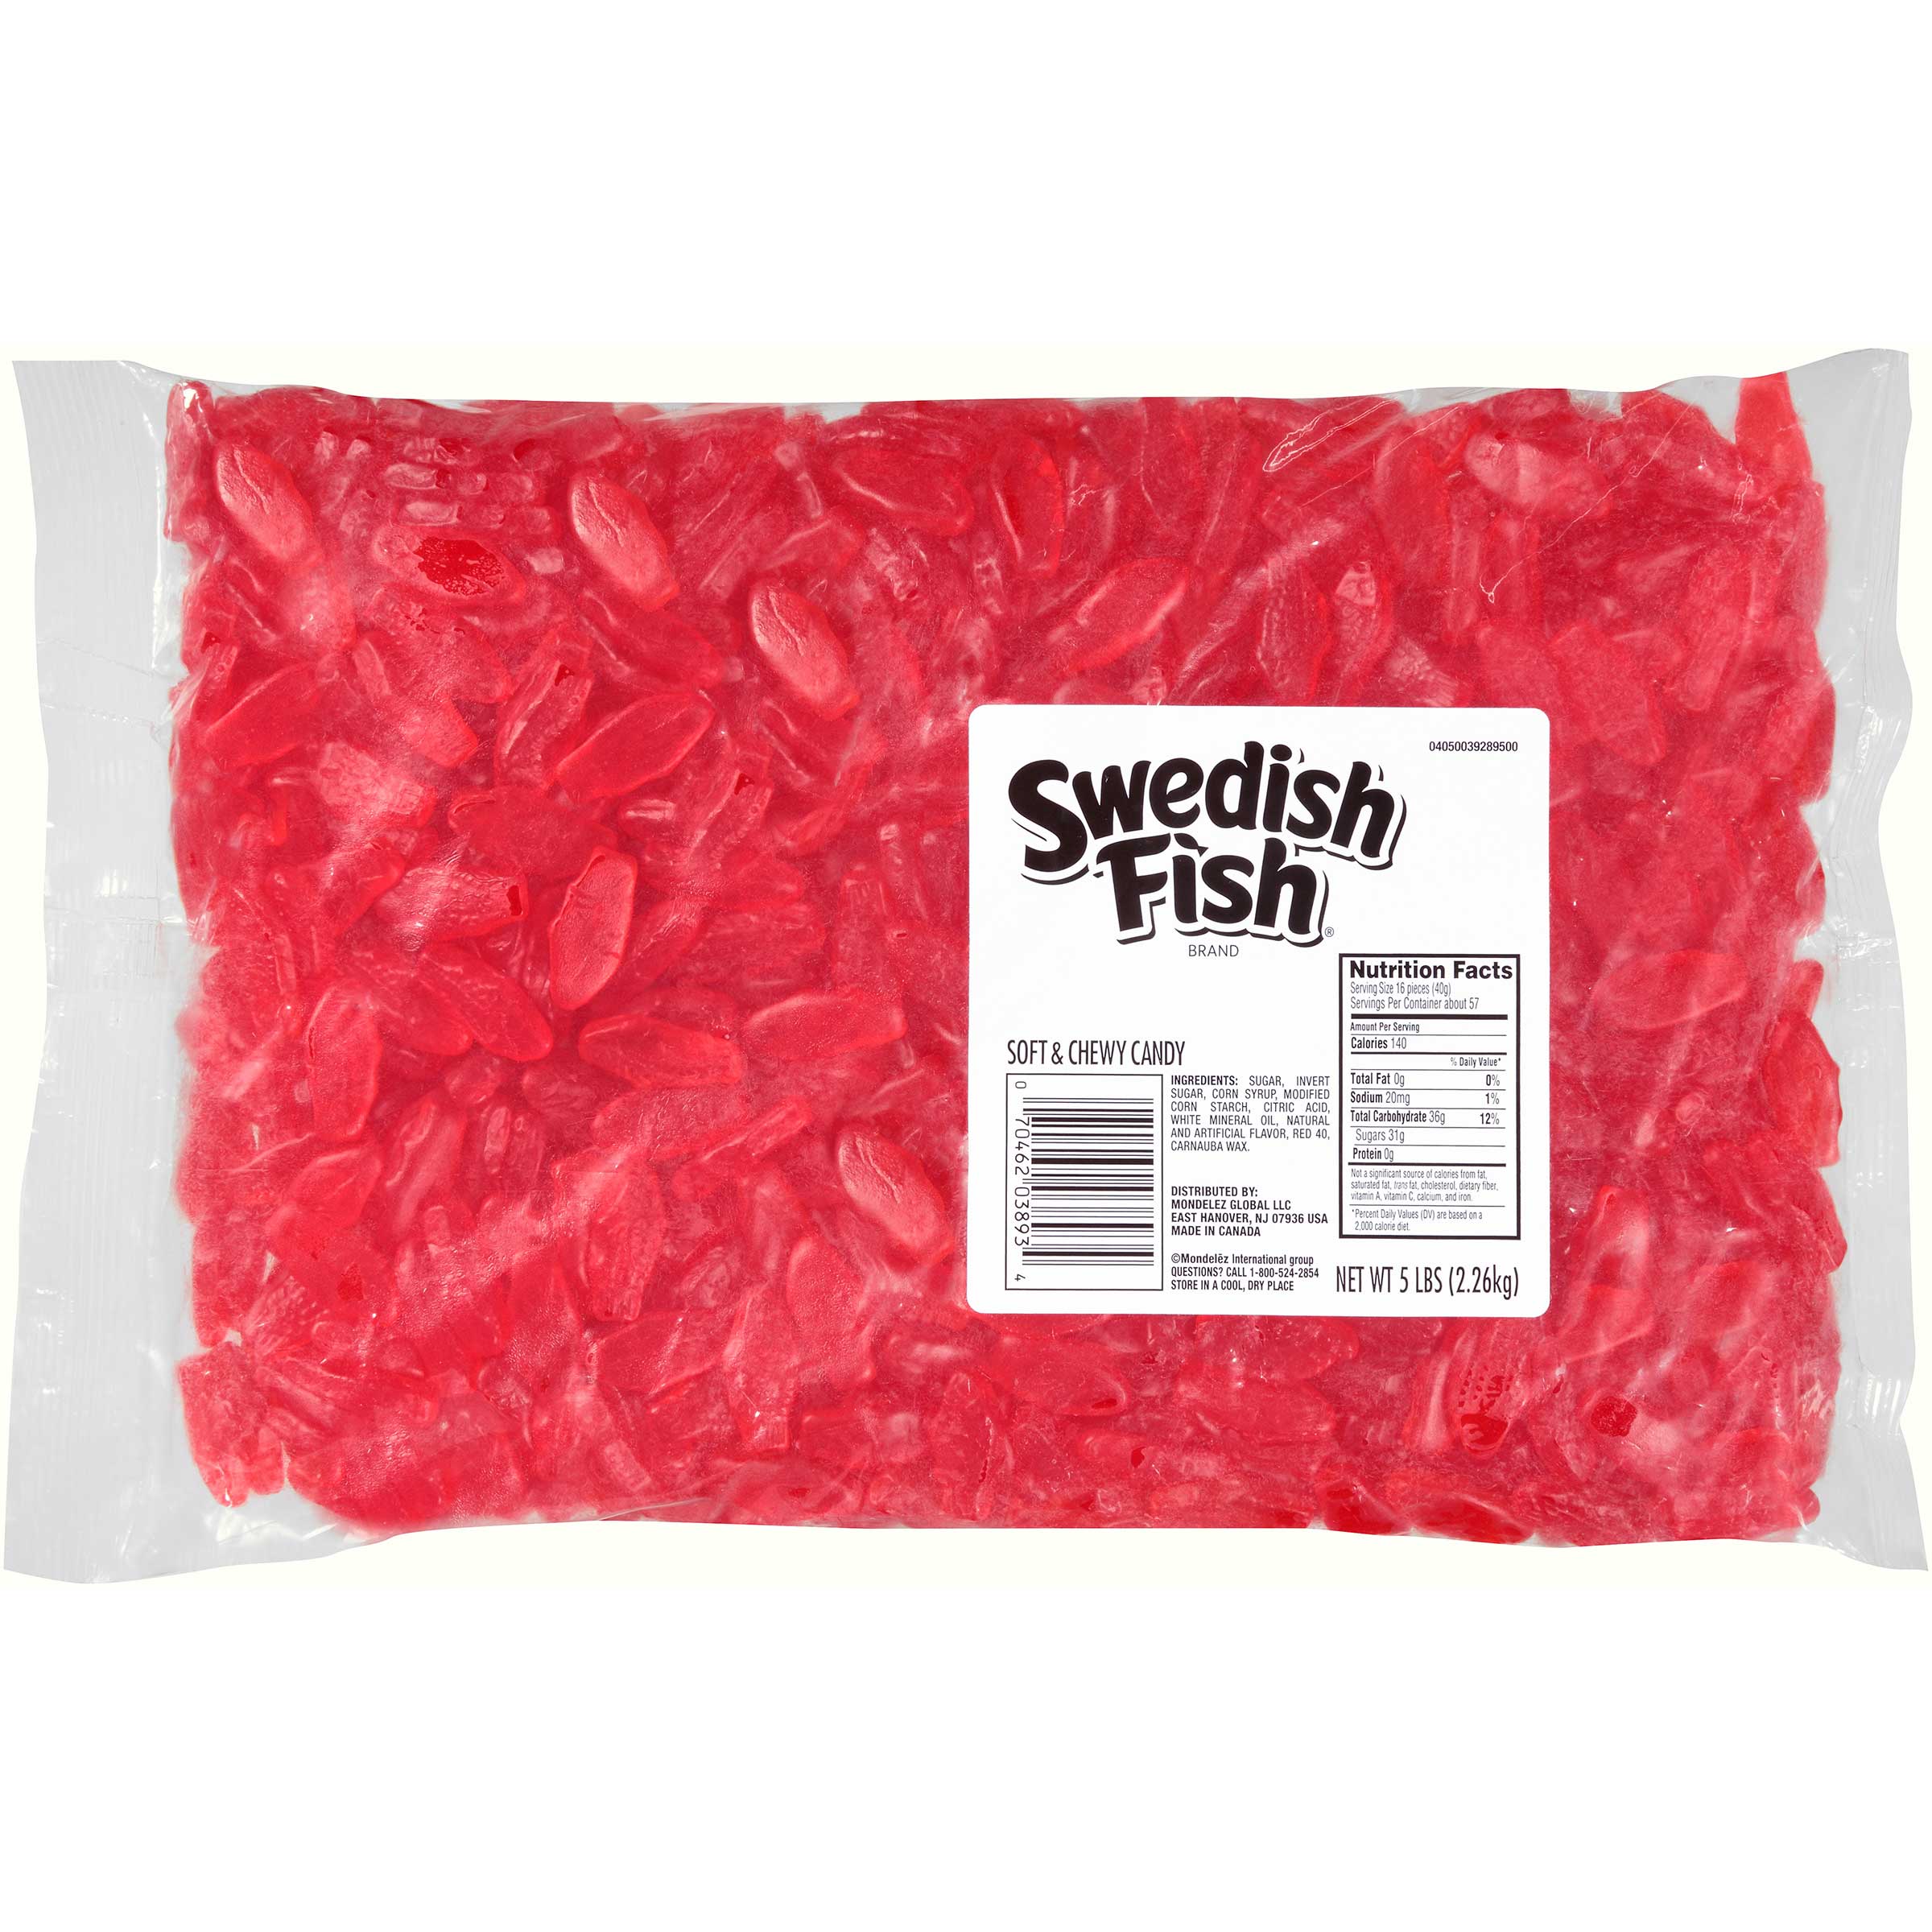 Cadbury Adams Swedish Fish Red Original Soft and Chewy Candy - Mini, 5  Pound -- 6 per case.